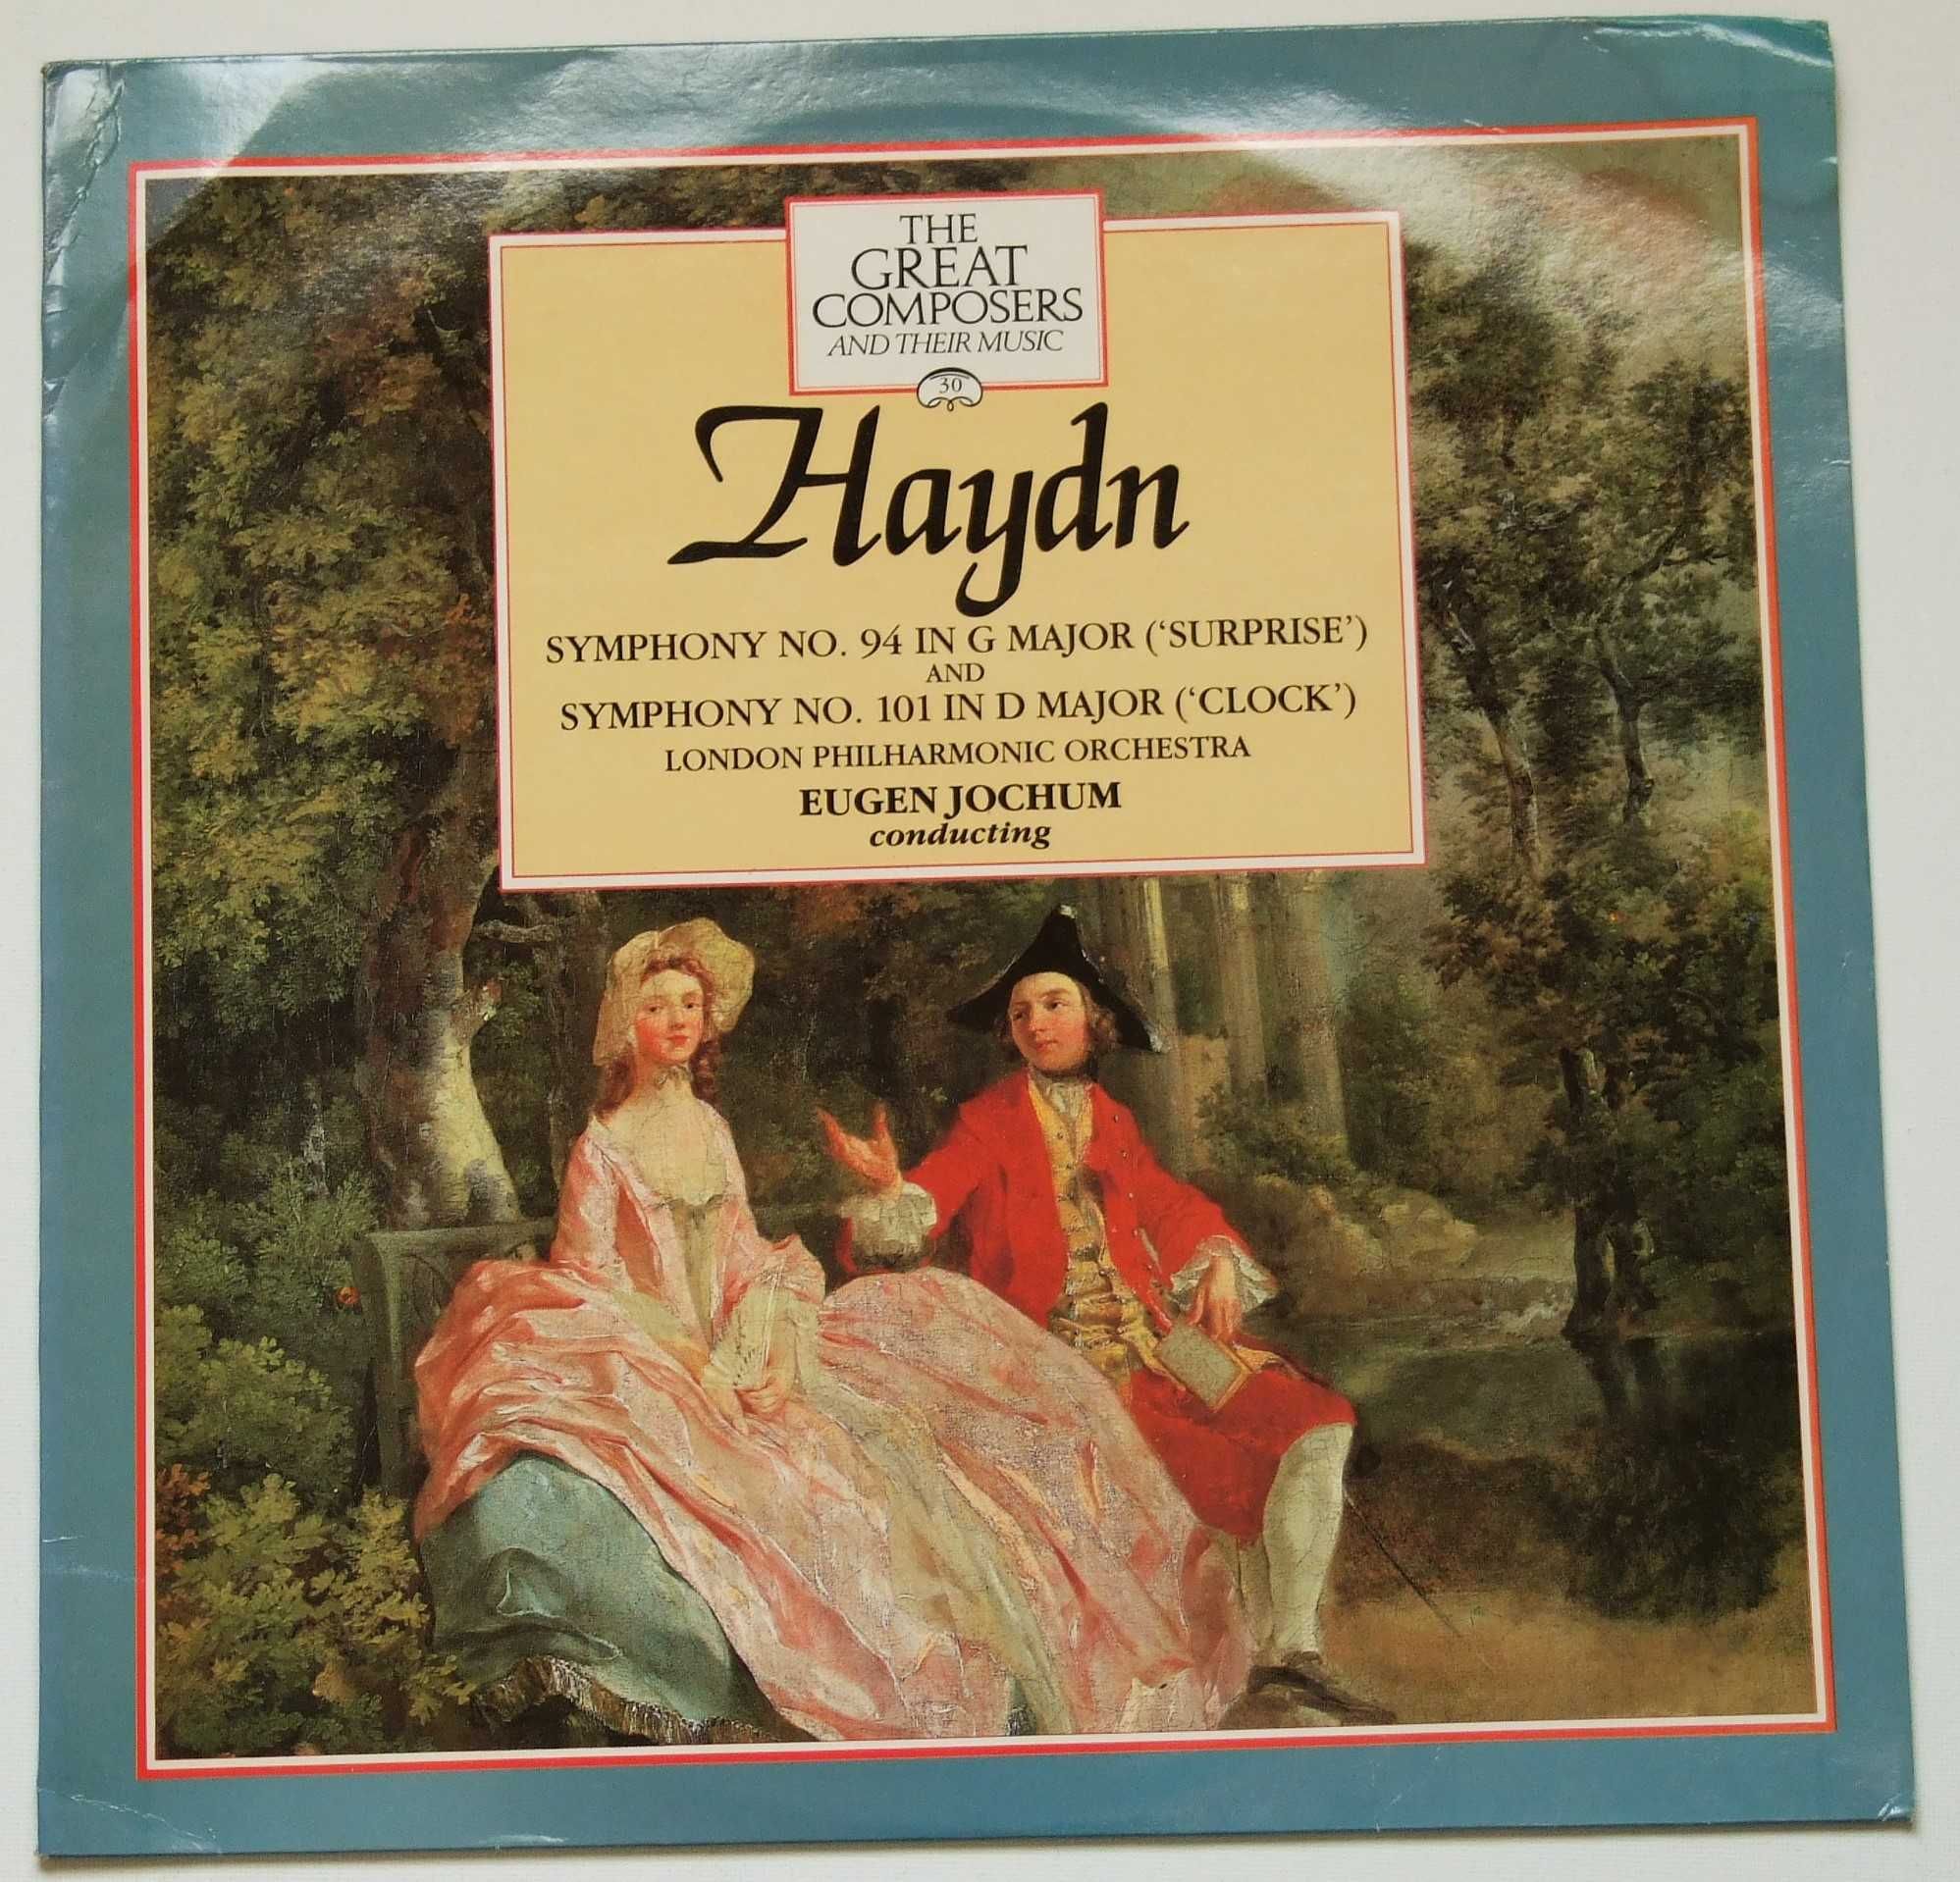 Haydn, London Philharmonic Orchestra